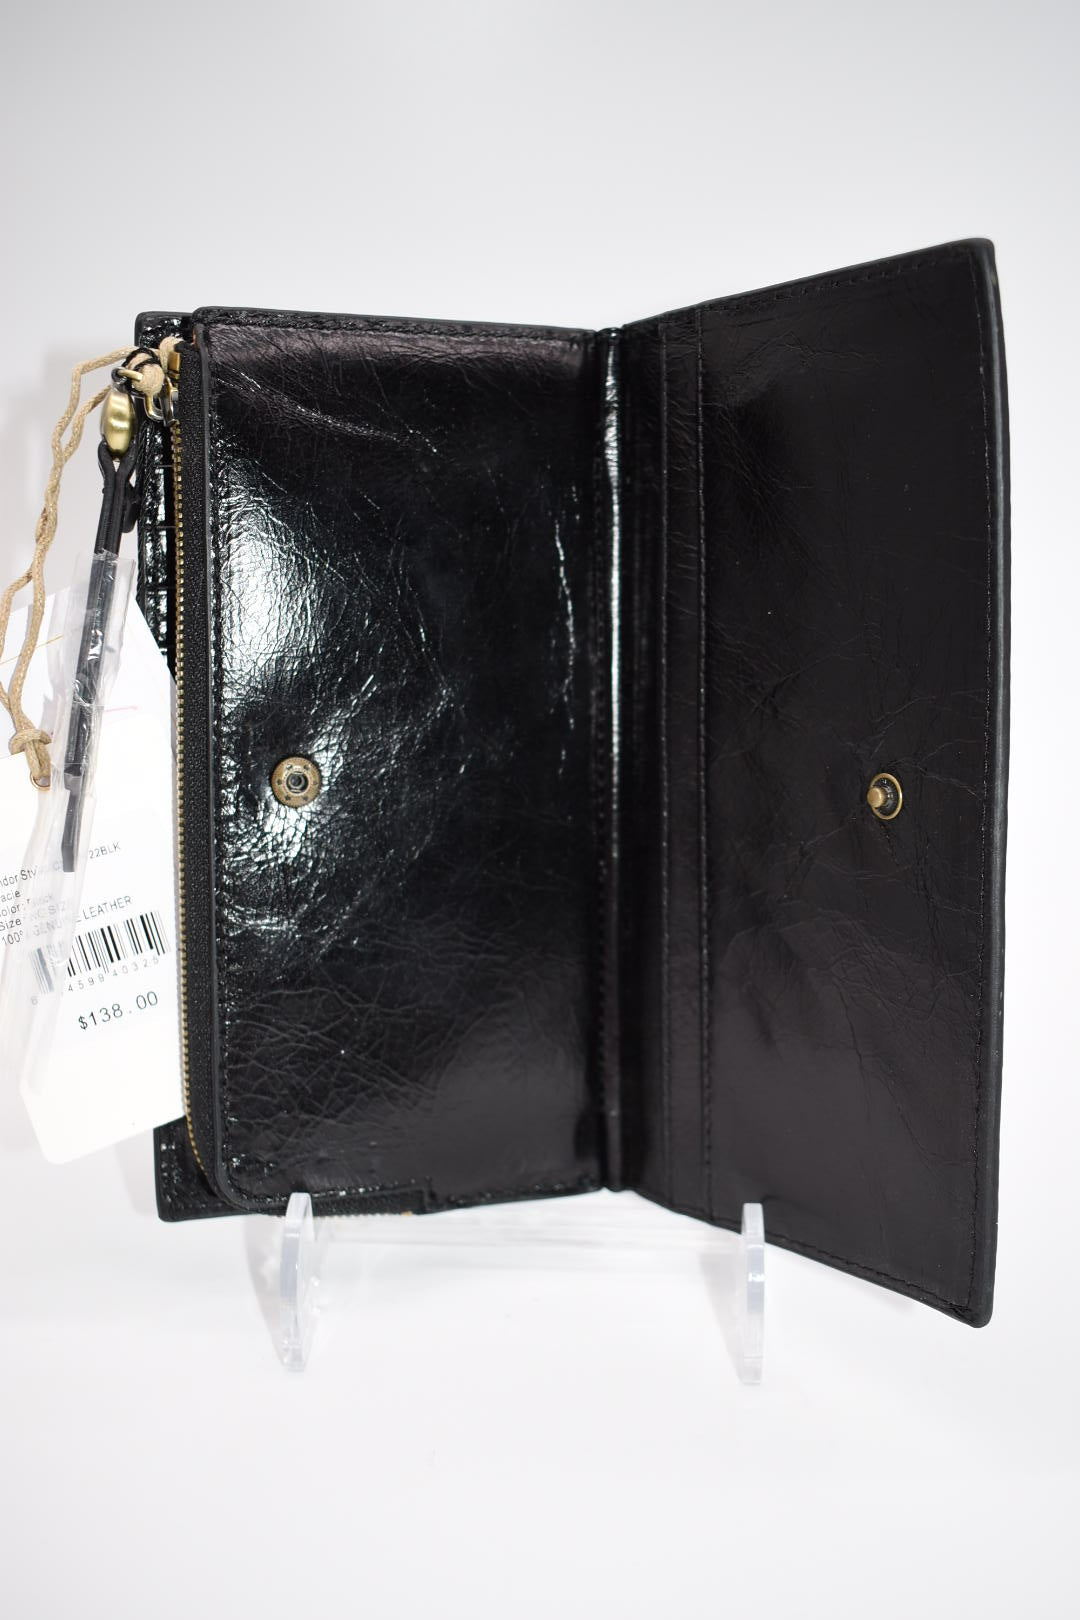 HOBO Gracie Leather Wallet in Black